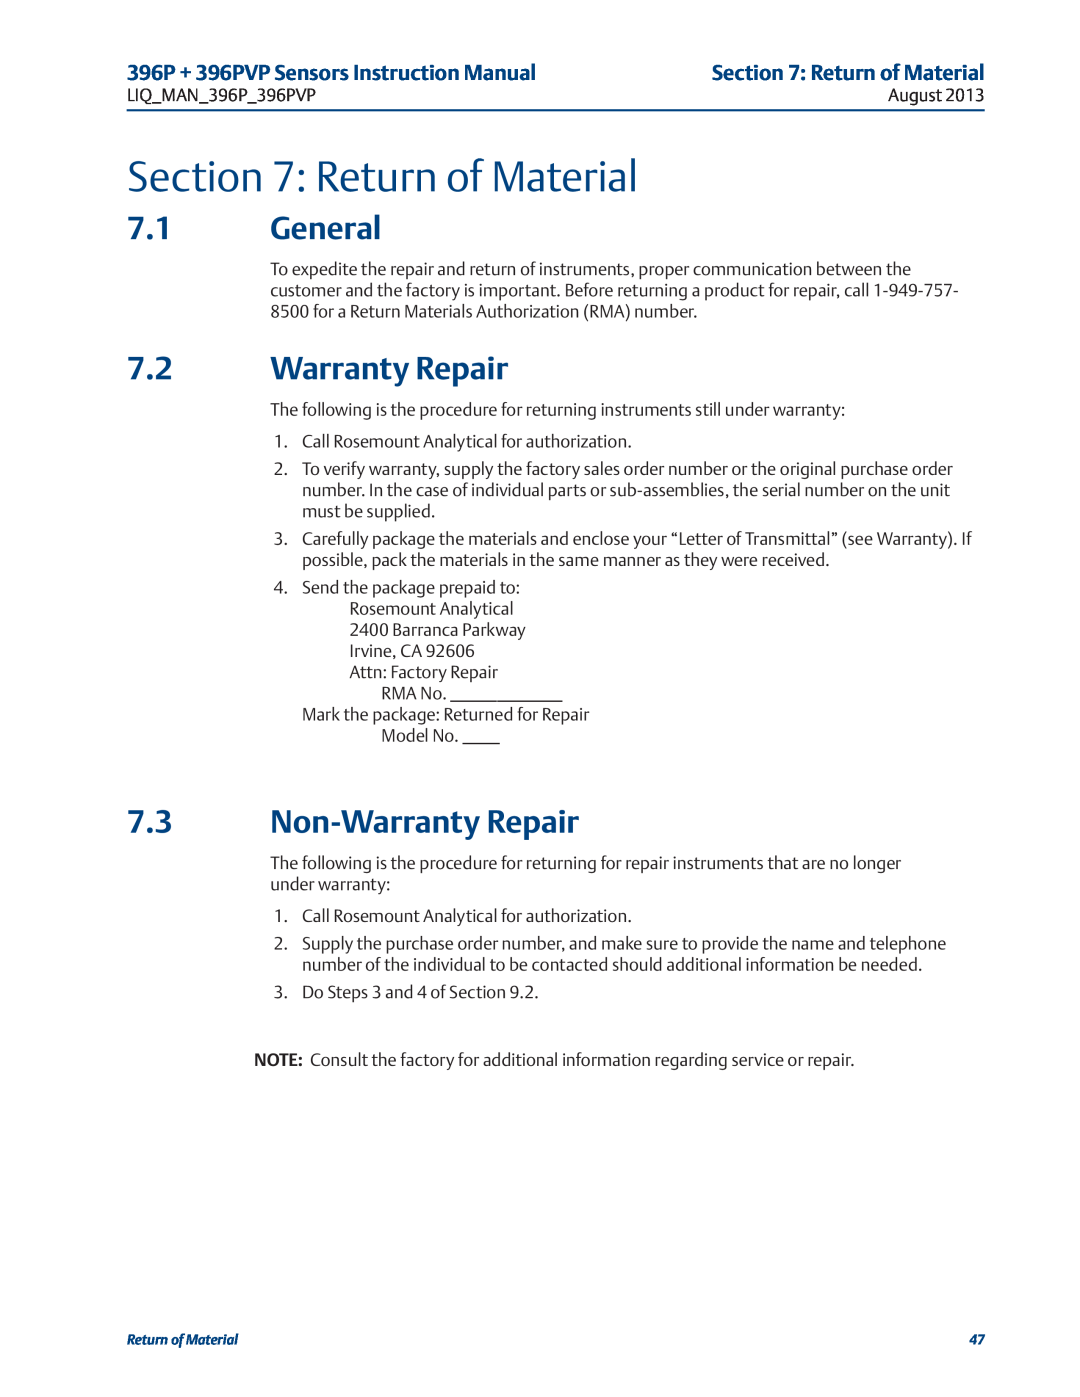 Emerson 396PVP instruction manual Return of Material, 7.1General, 7.2Warranty Repair, 7.3Non-WarrantyRepair 